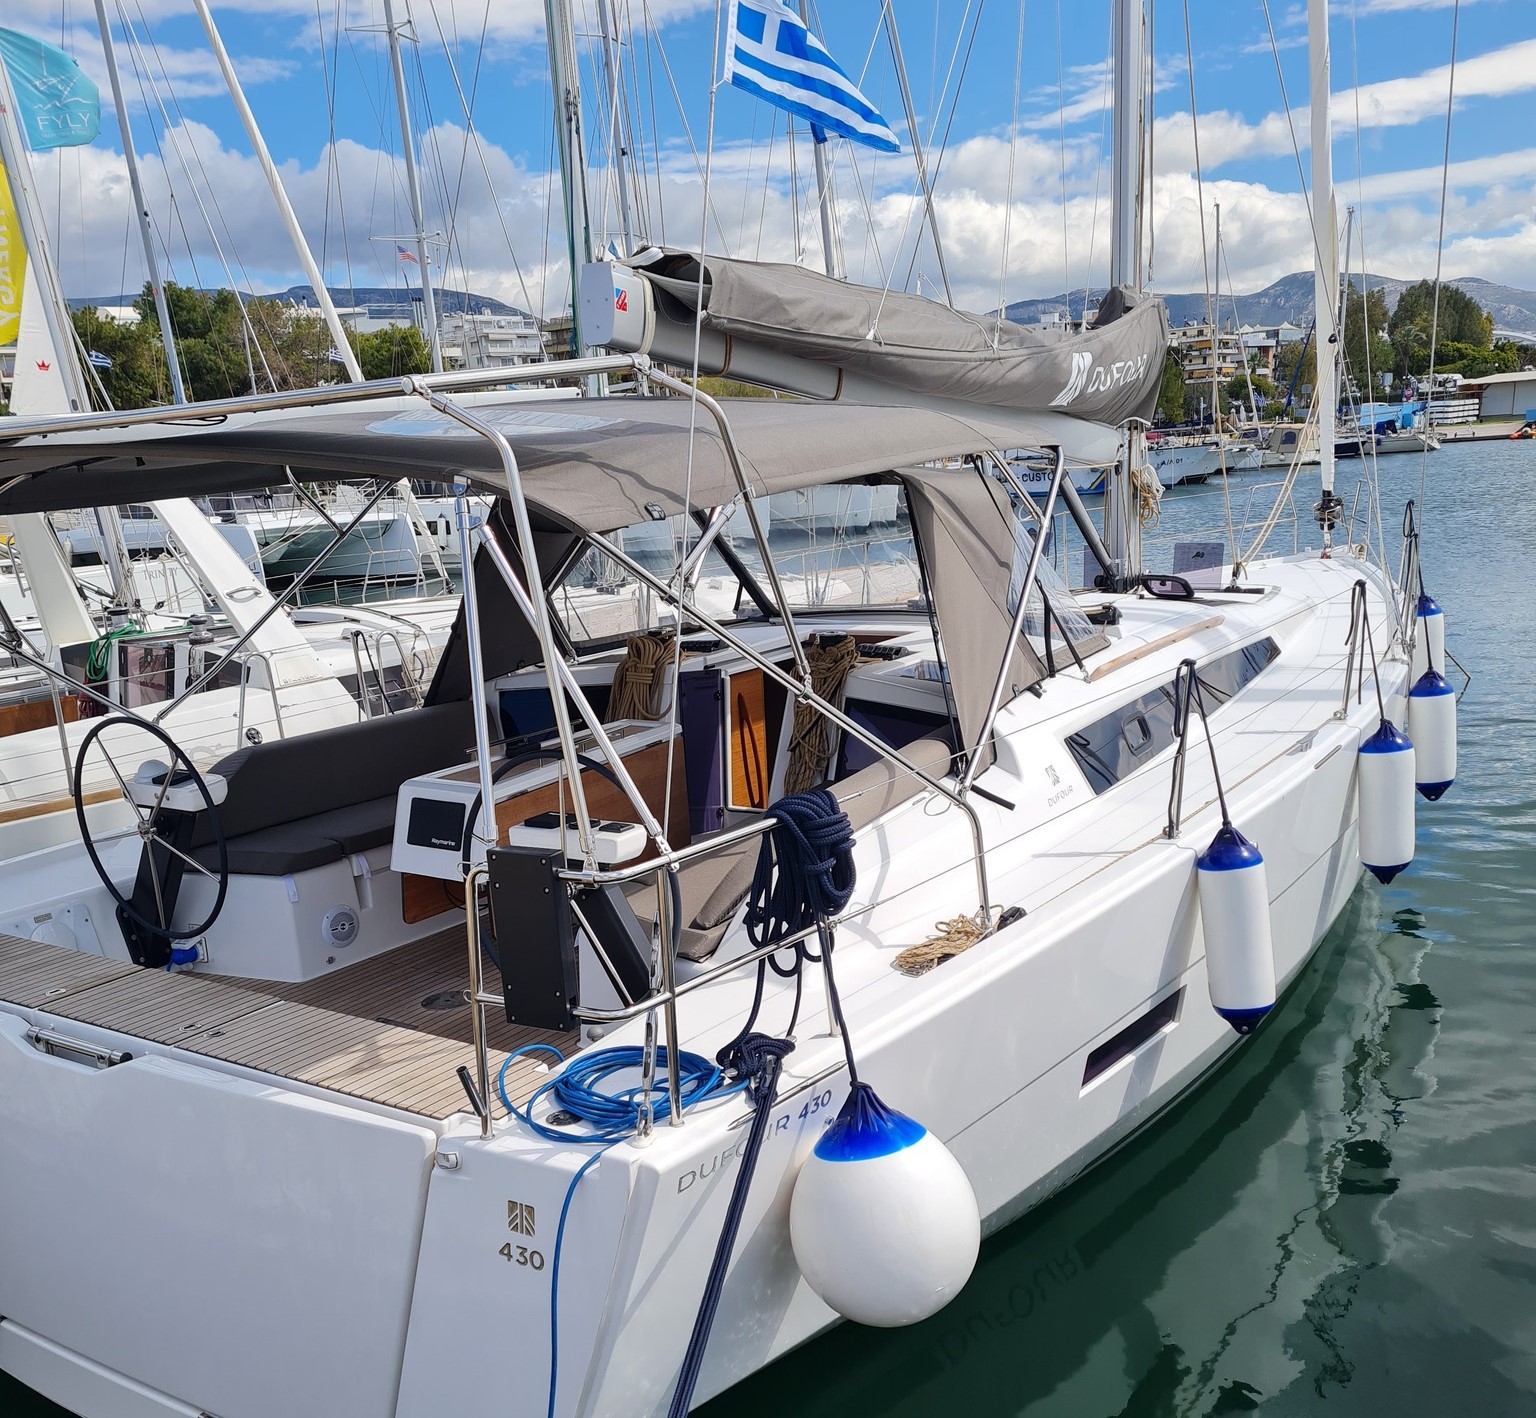 Romygka Sailing in Volos Yacht: Penelope